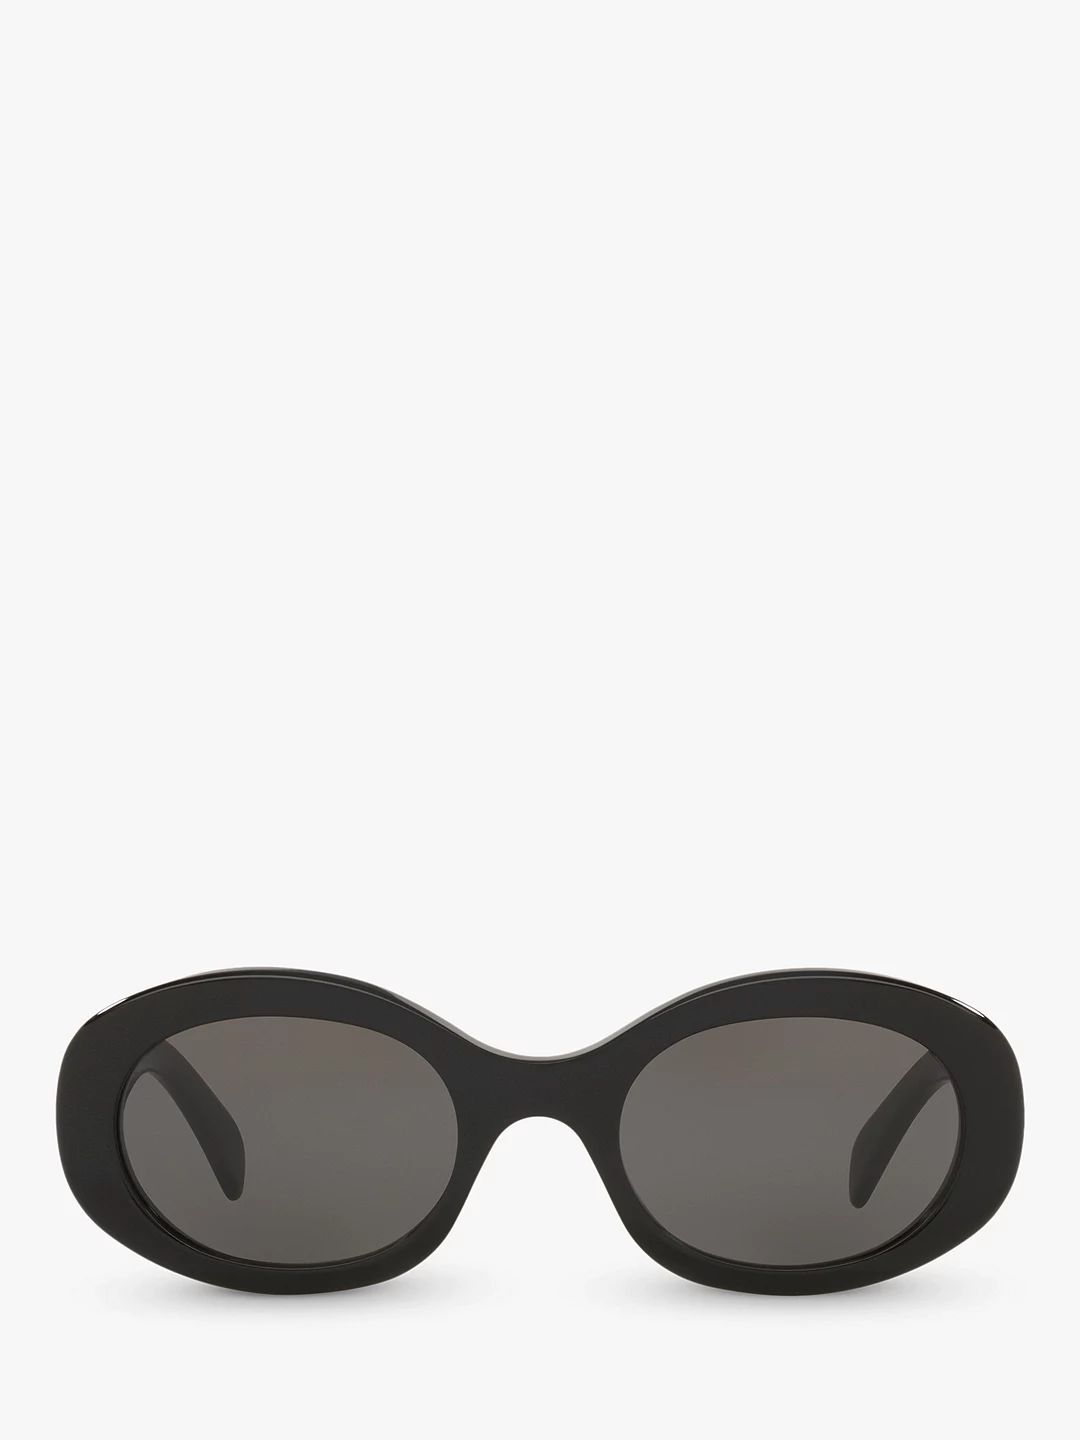 Celine CL000312 Unisex Oval Sunglasses, Black/Grey | John Lewis (UK)